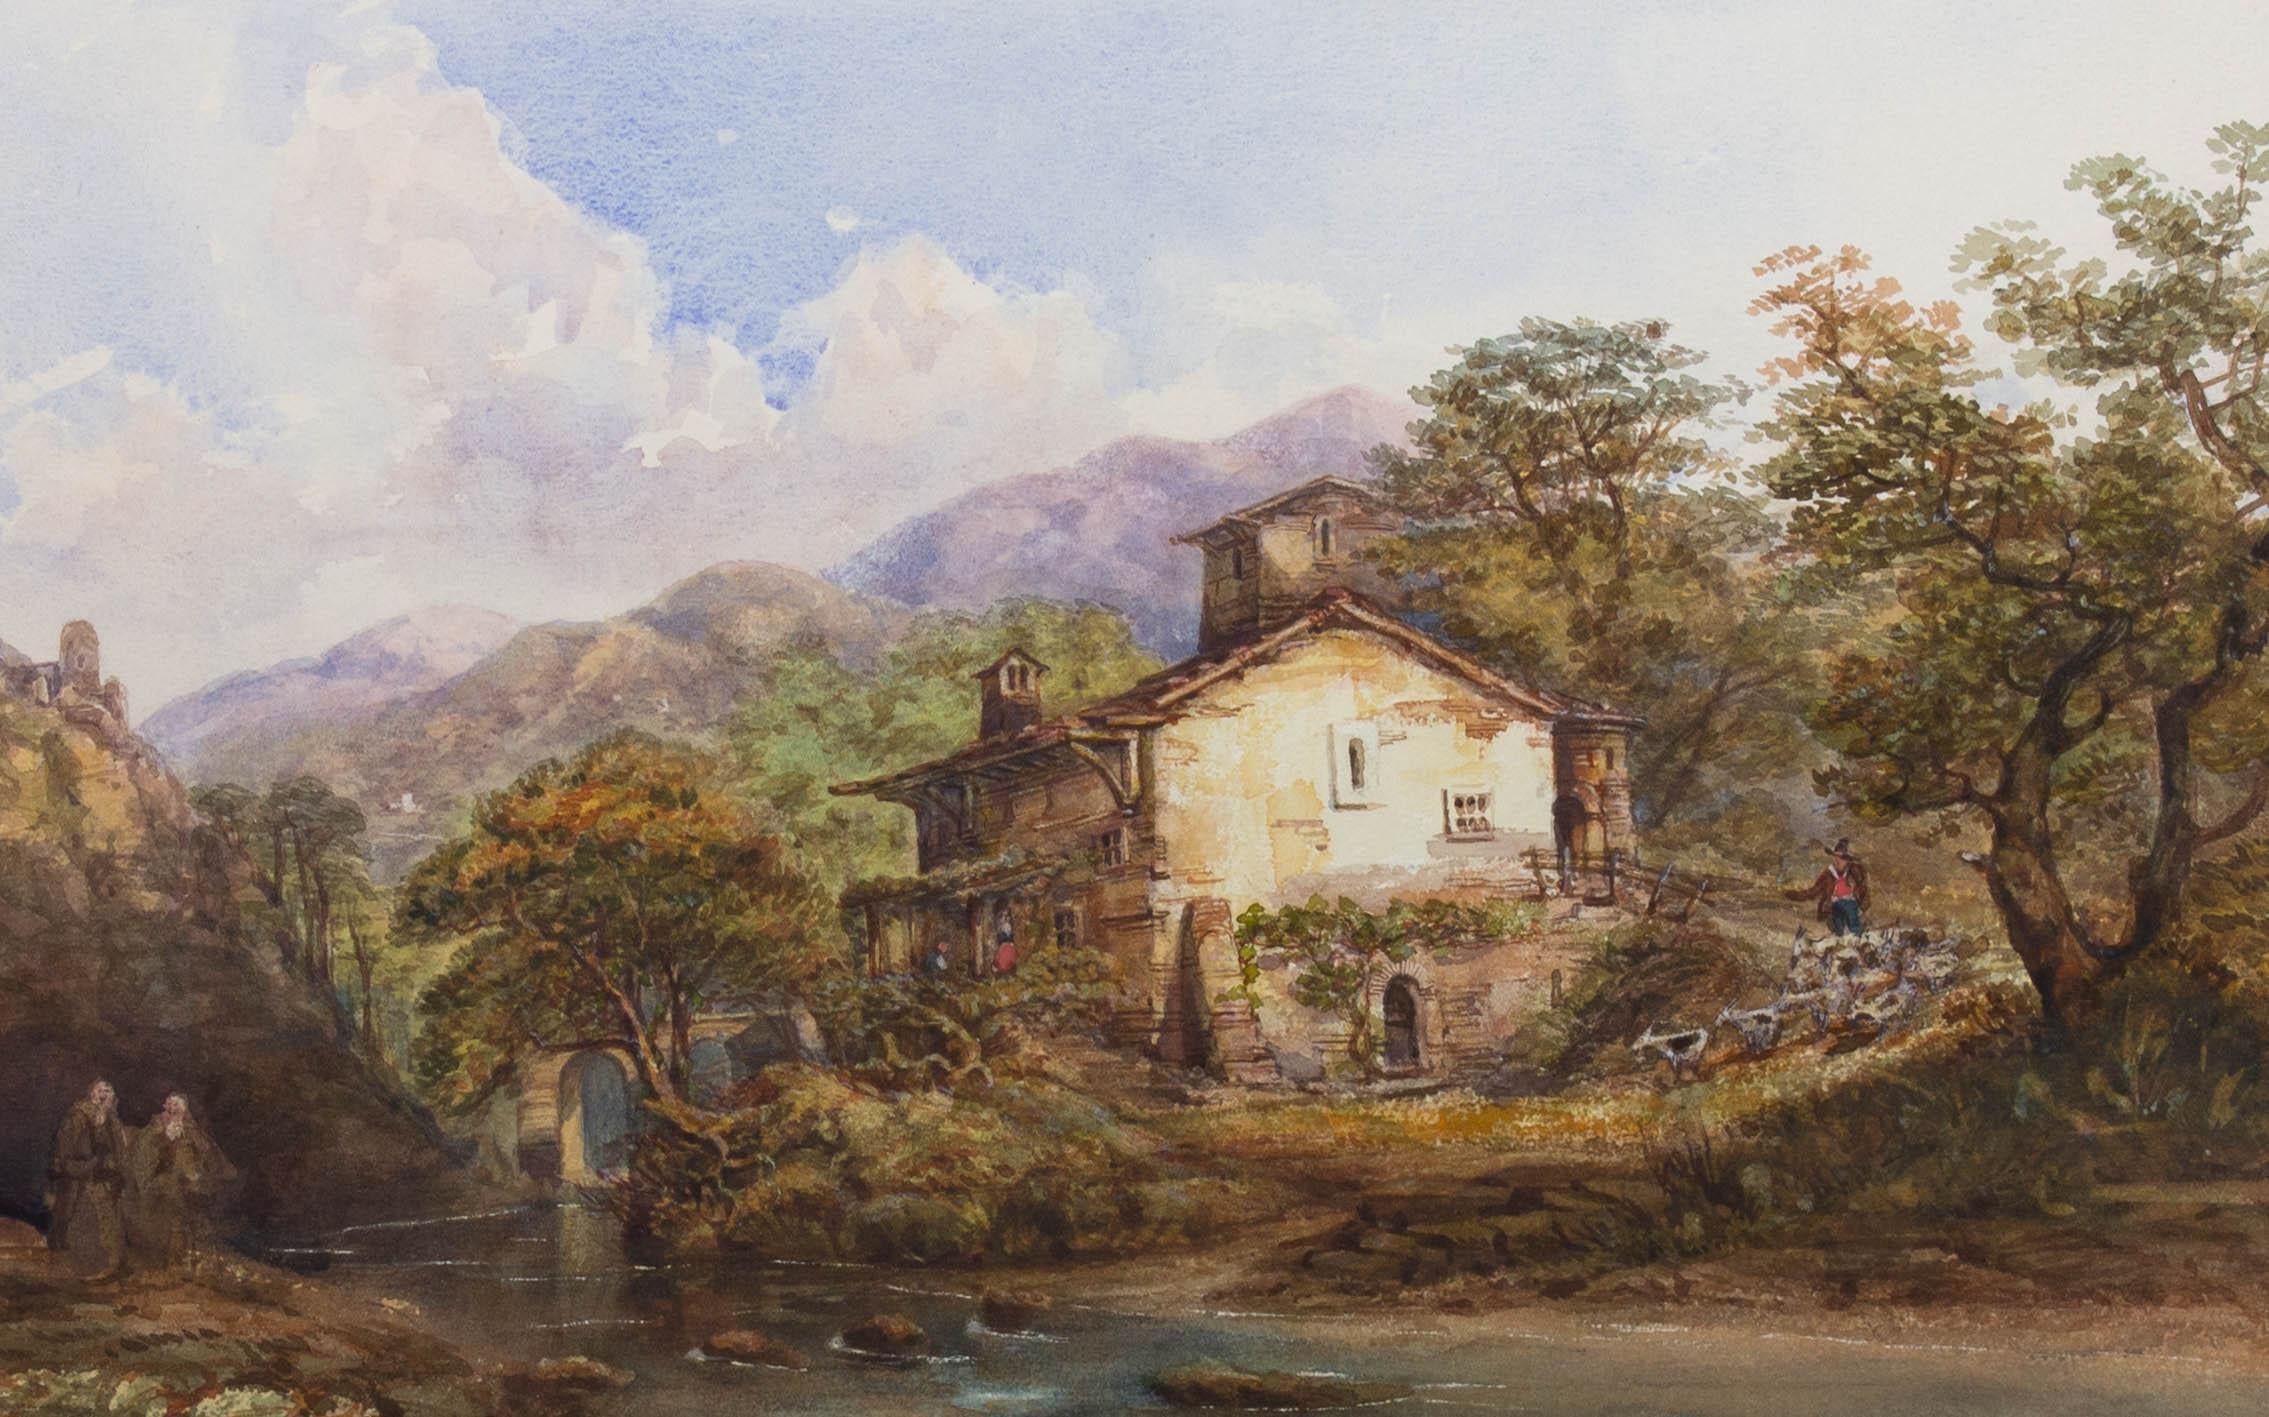 Unknown Landscape Art - Mid 19th Century Watercolour - Mountain Chalet